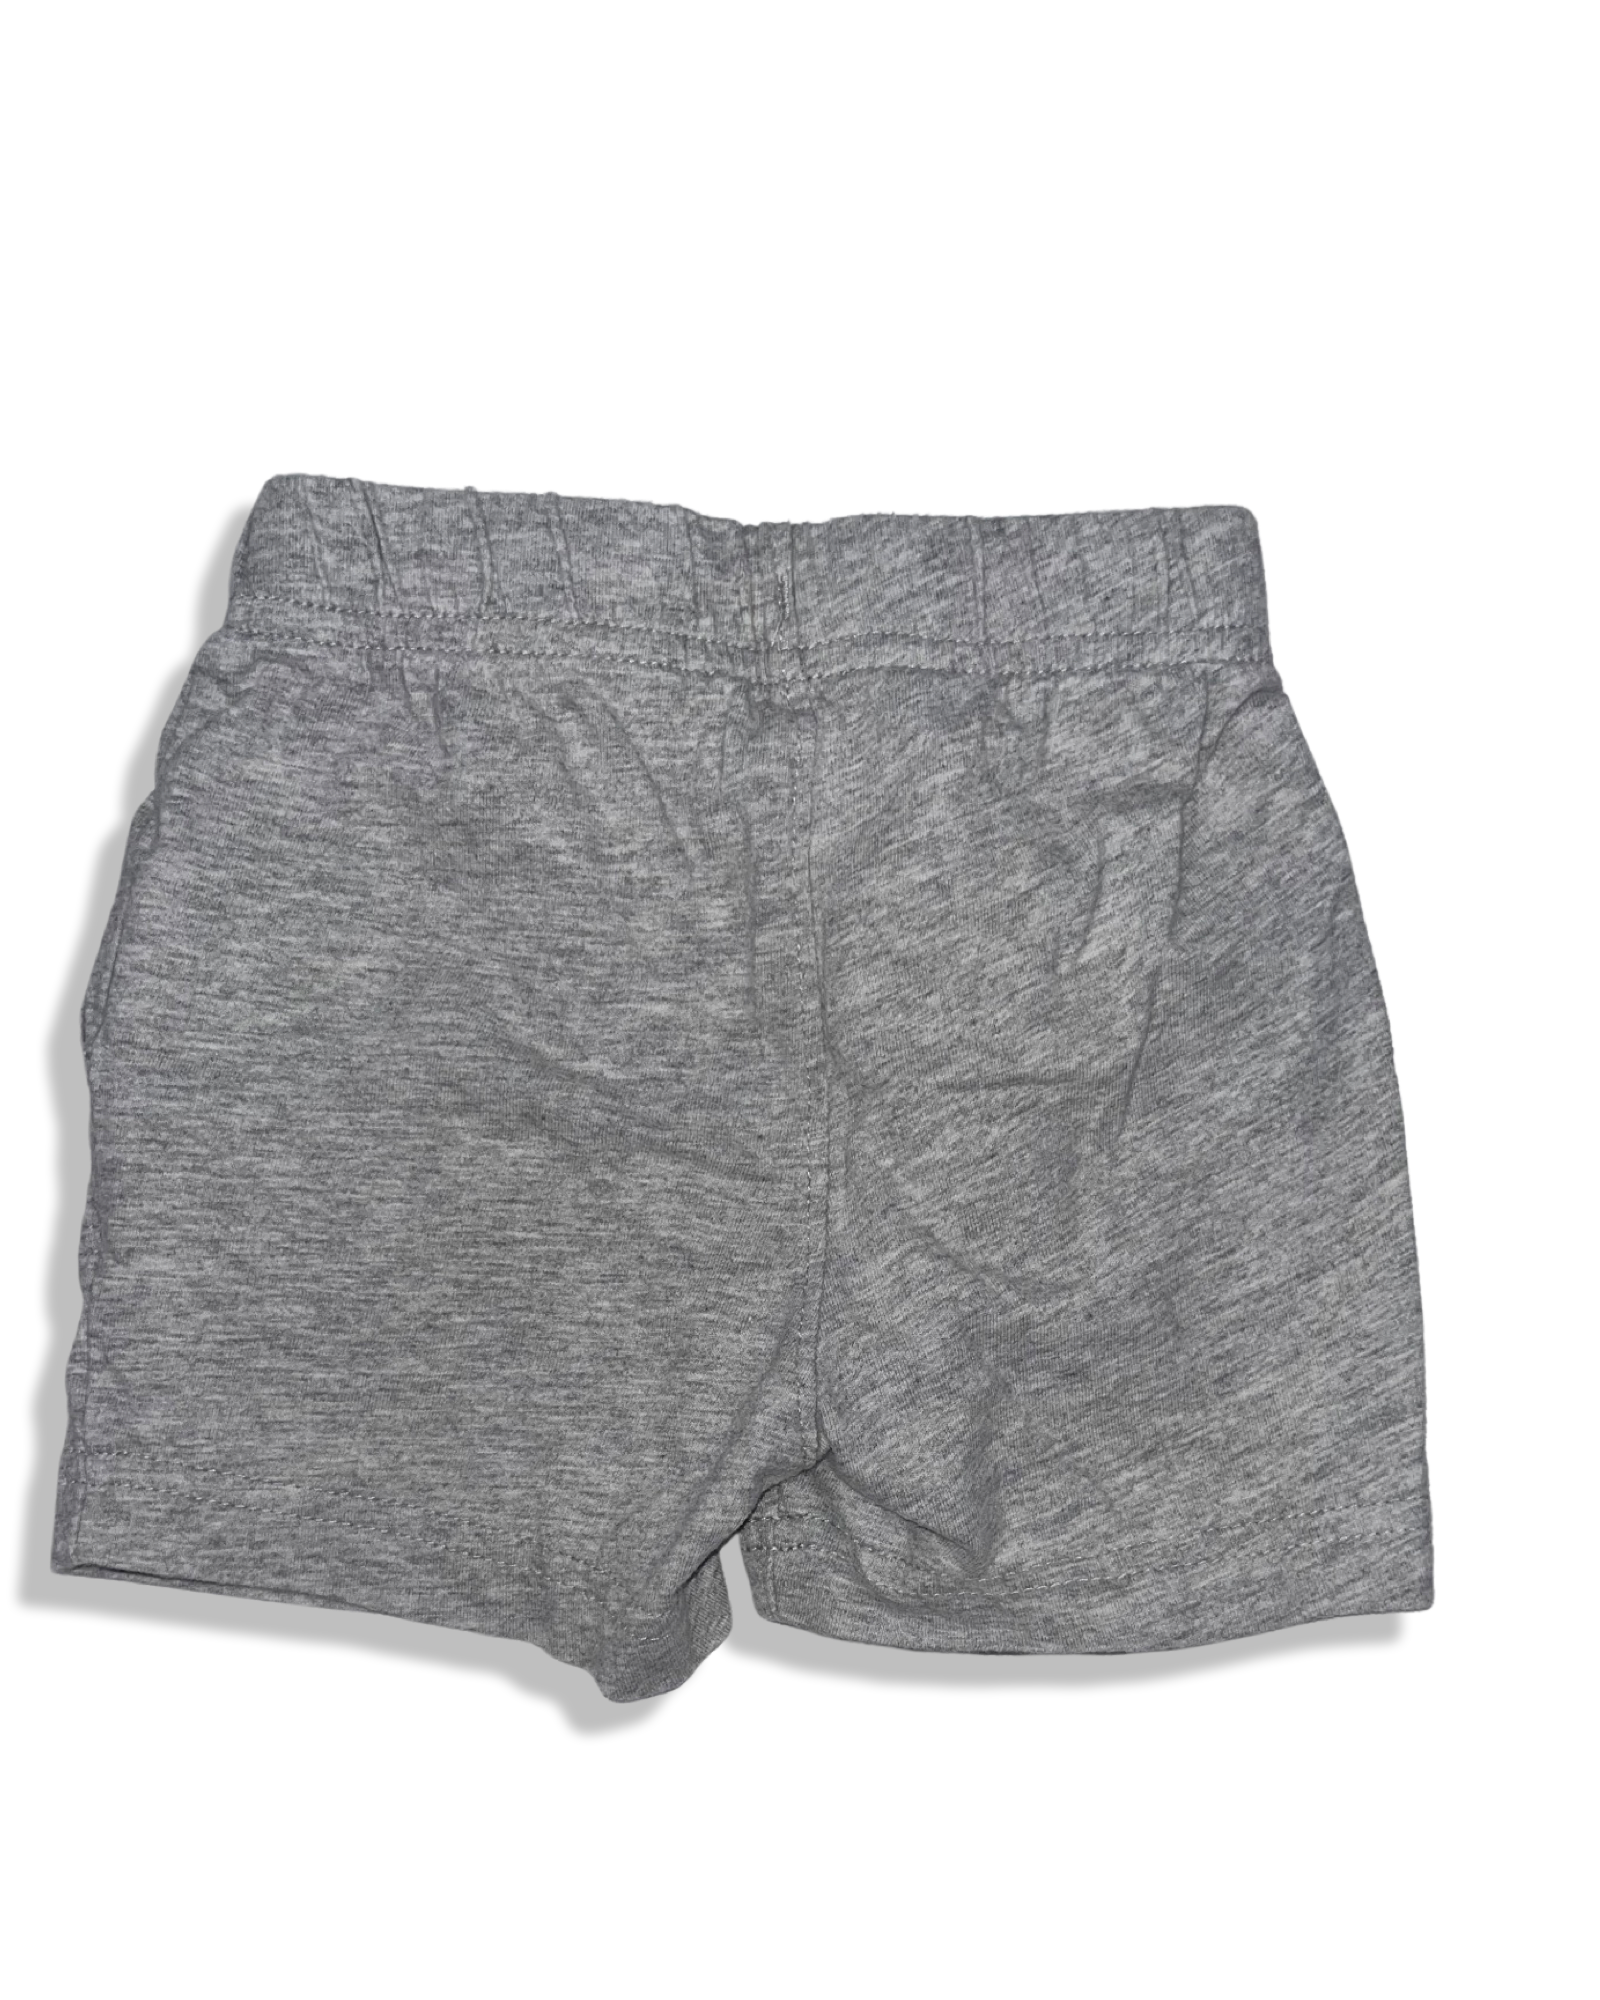 Baby Gap Grey Shorts (6-12M)